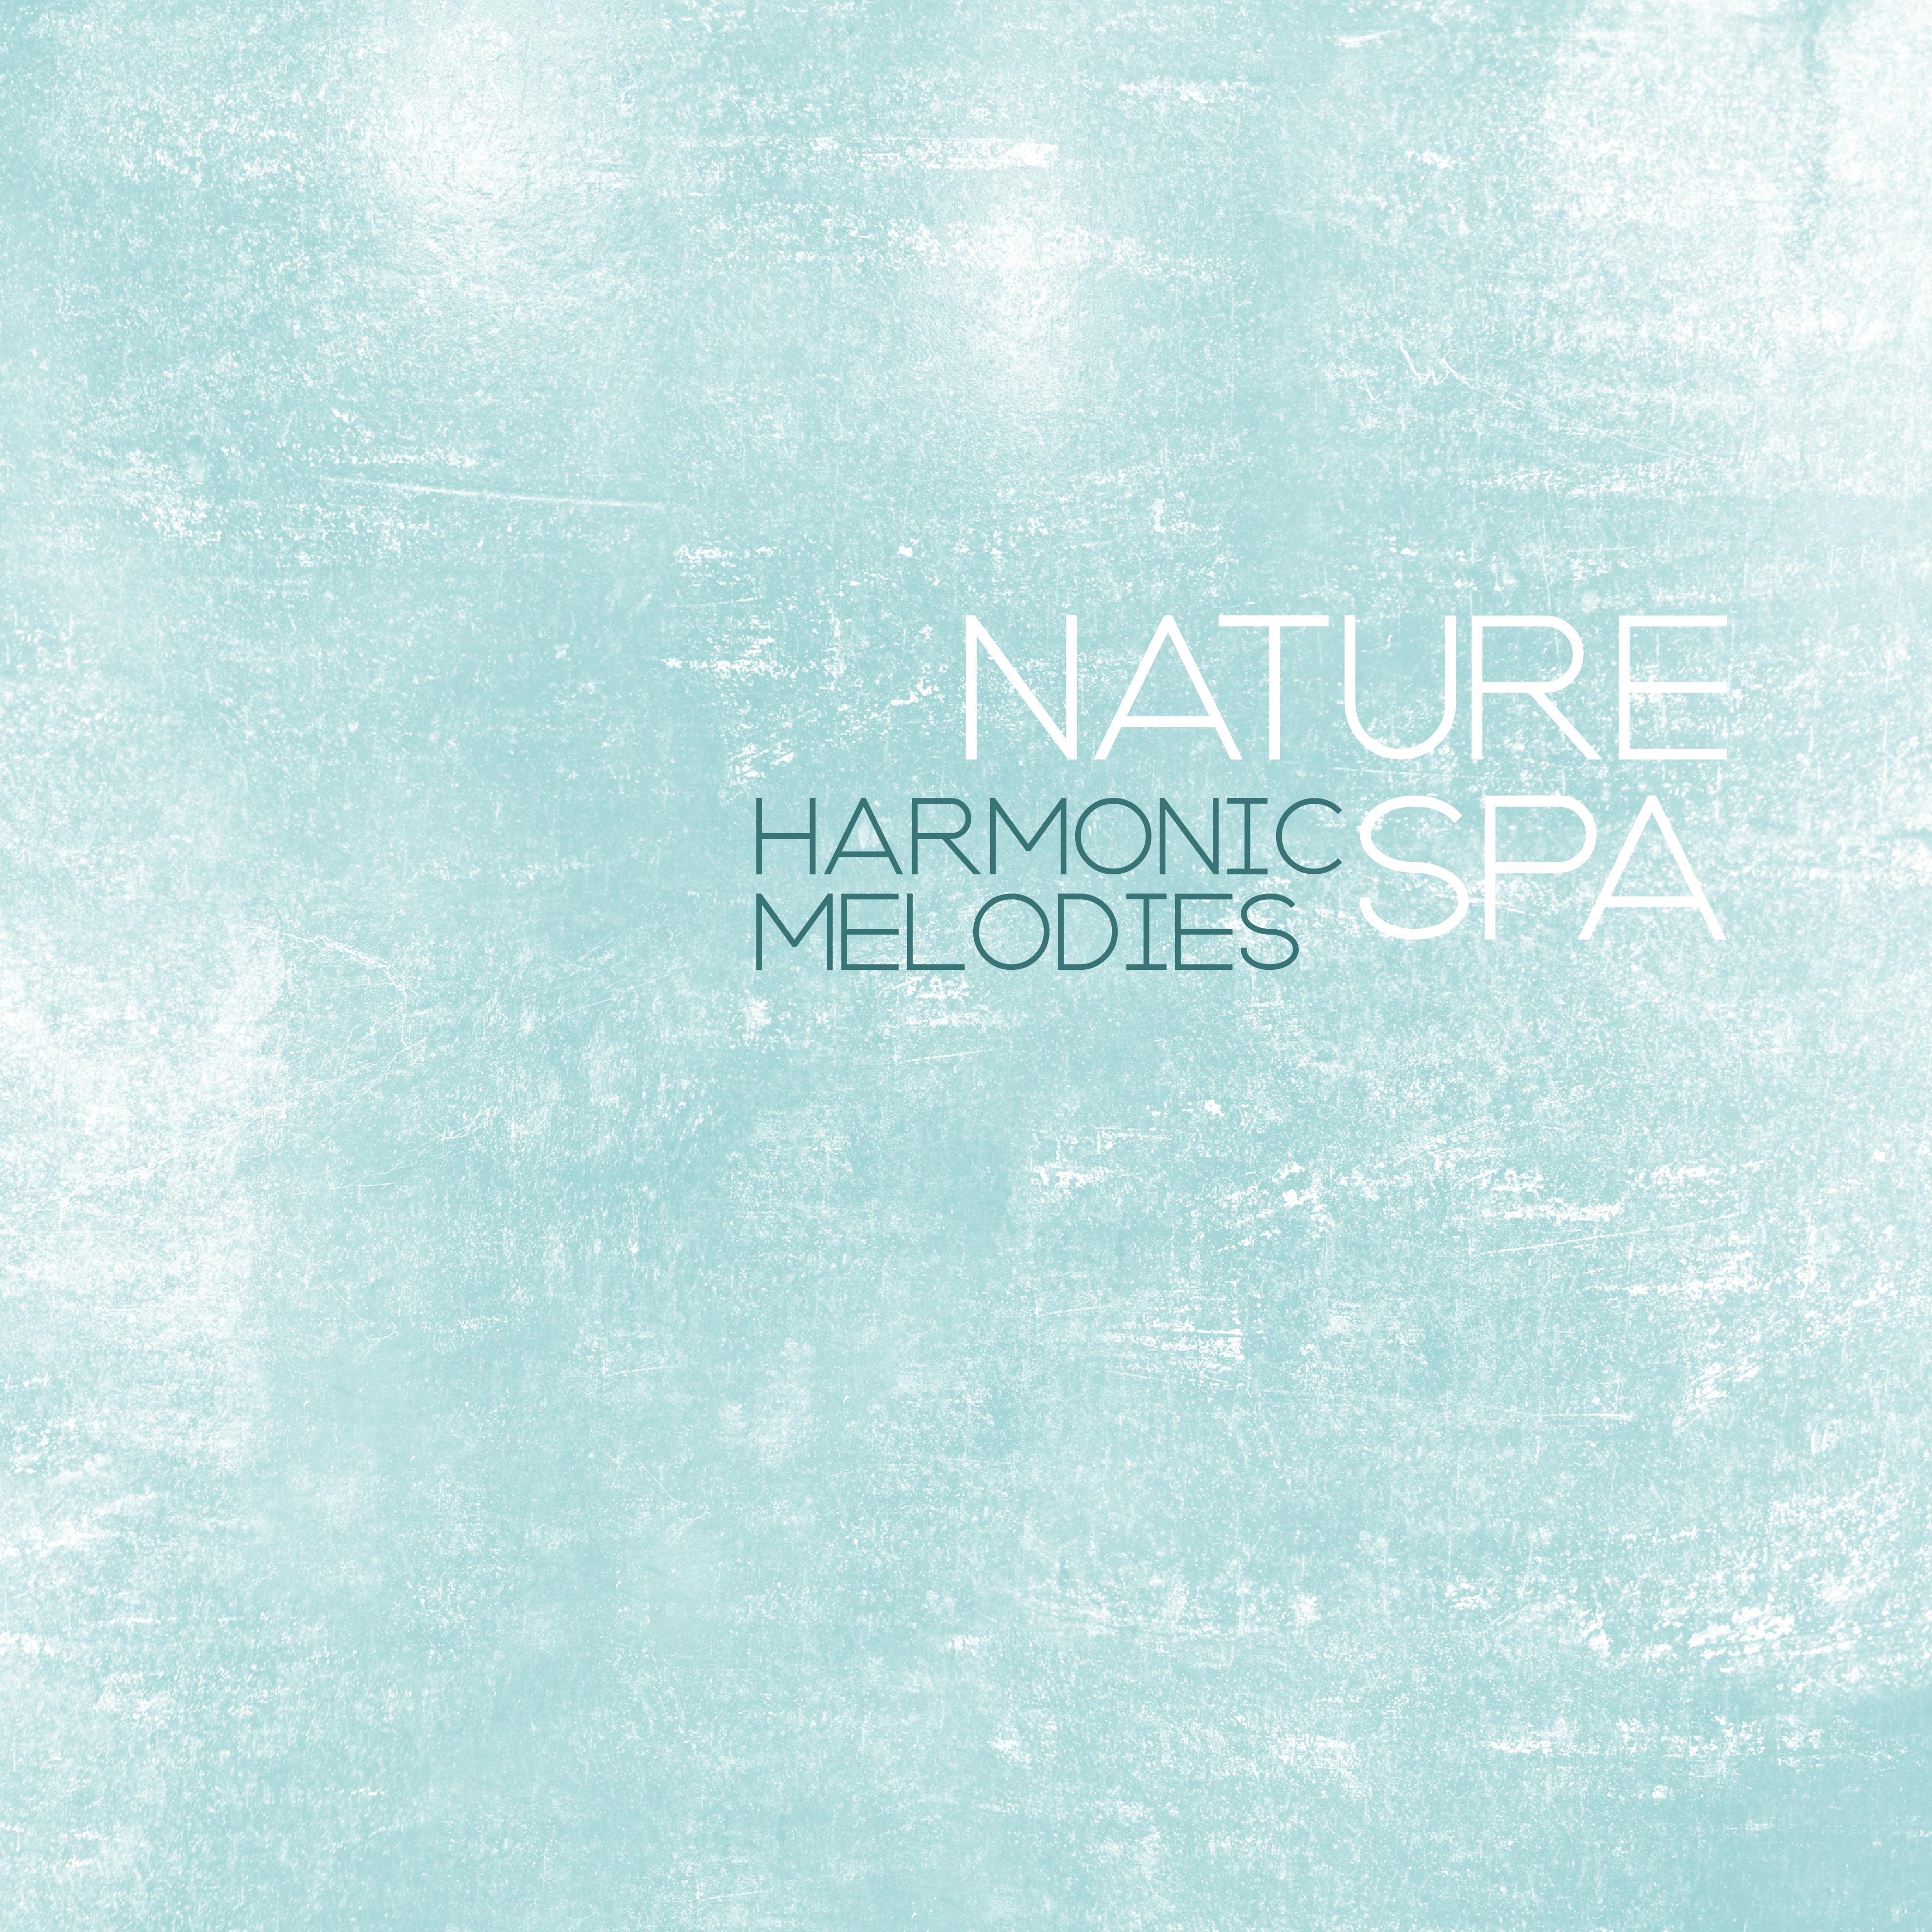 Nature Spa Harmonic Melodies: New Age Nature 2019 Music for Spa Salon, Wellness, Aromatherapy, Massage & Sauna